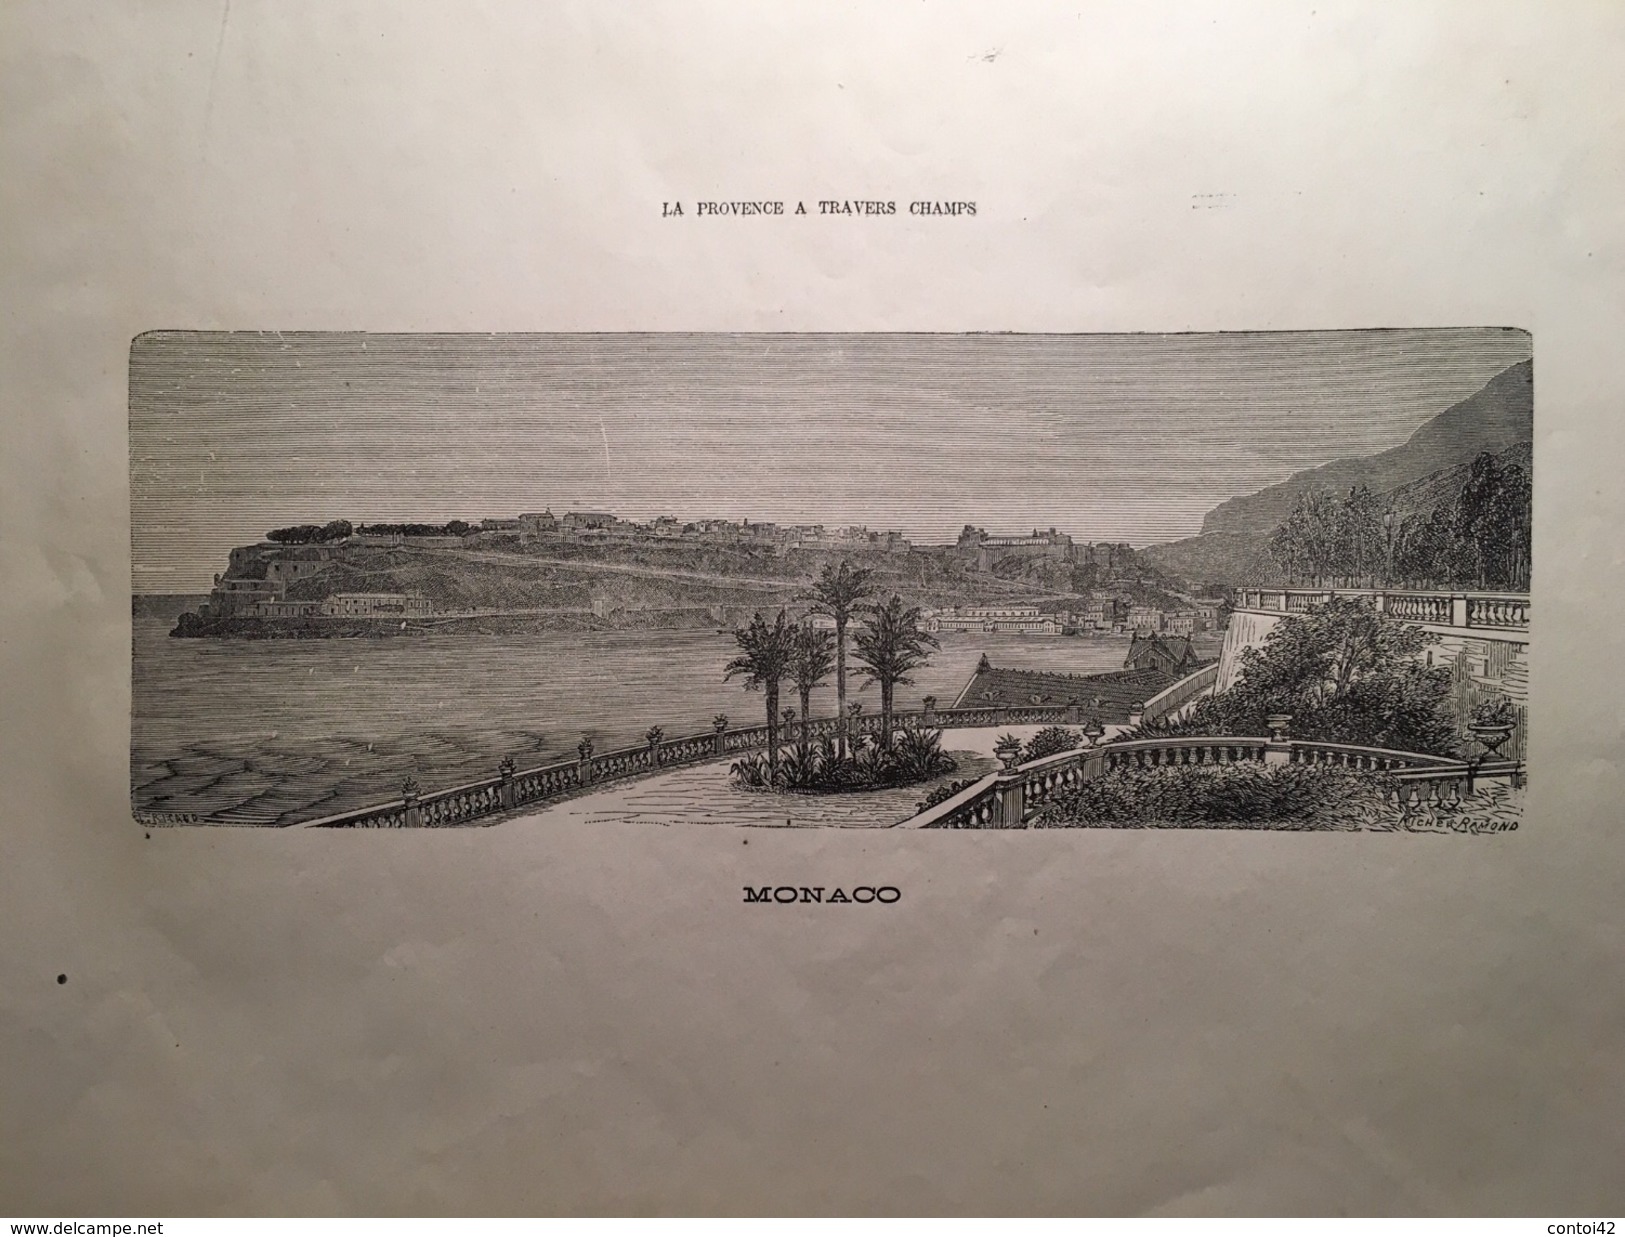 MONACO GRAVURE ANCIENNE ORIGINALE 1880 - Estampes & Gravures